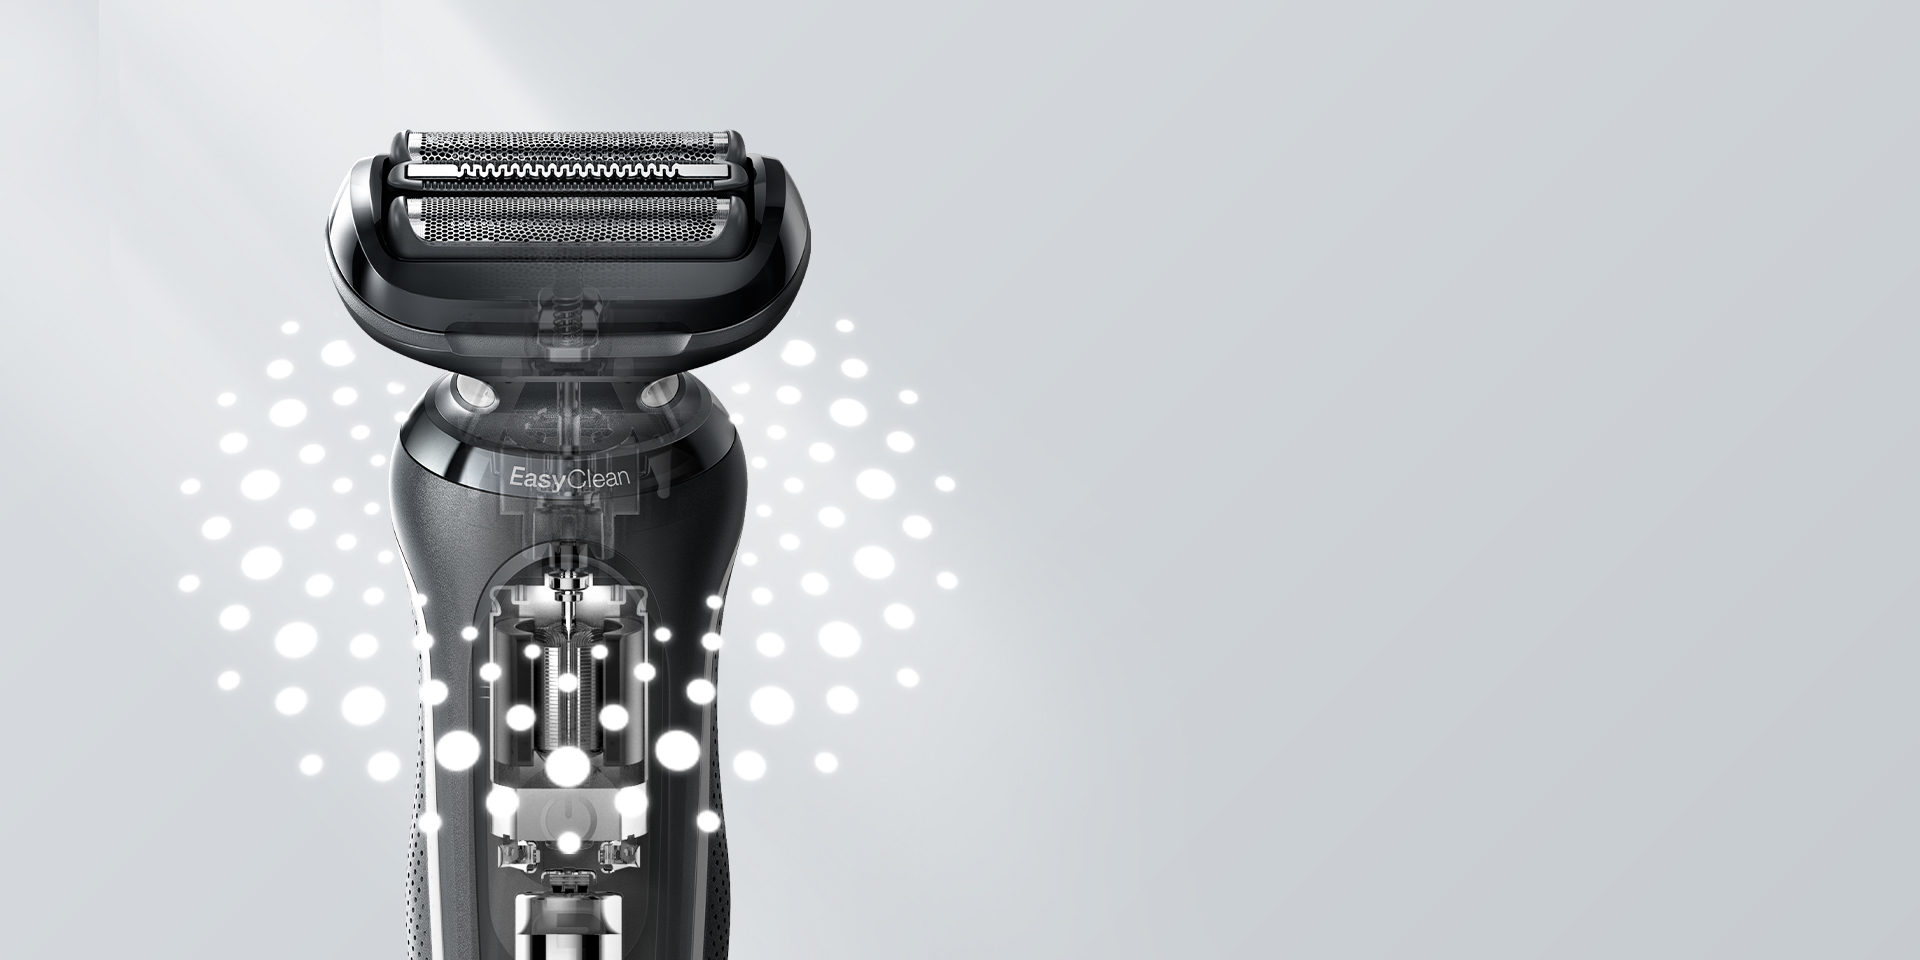 Series 5 50-W4650cs Shaver for Men, Wet & Dry with AutoSense | UK